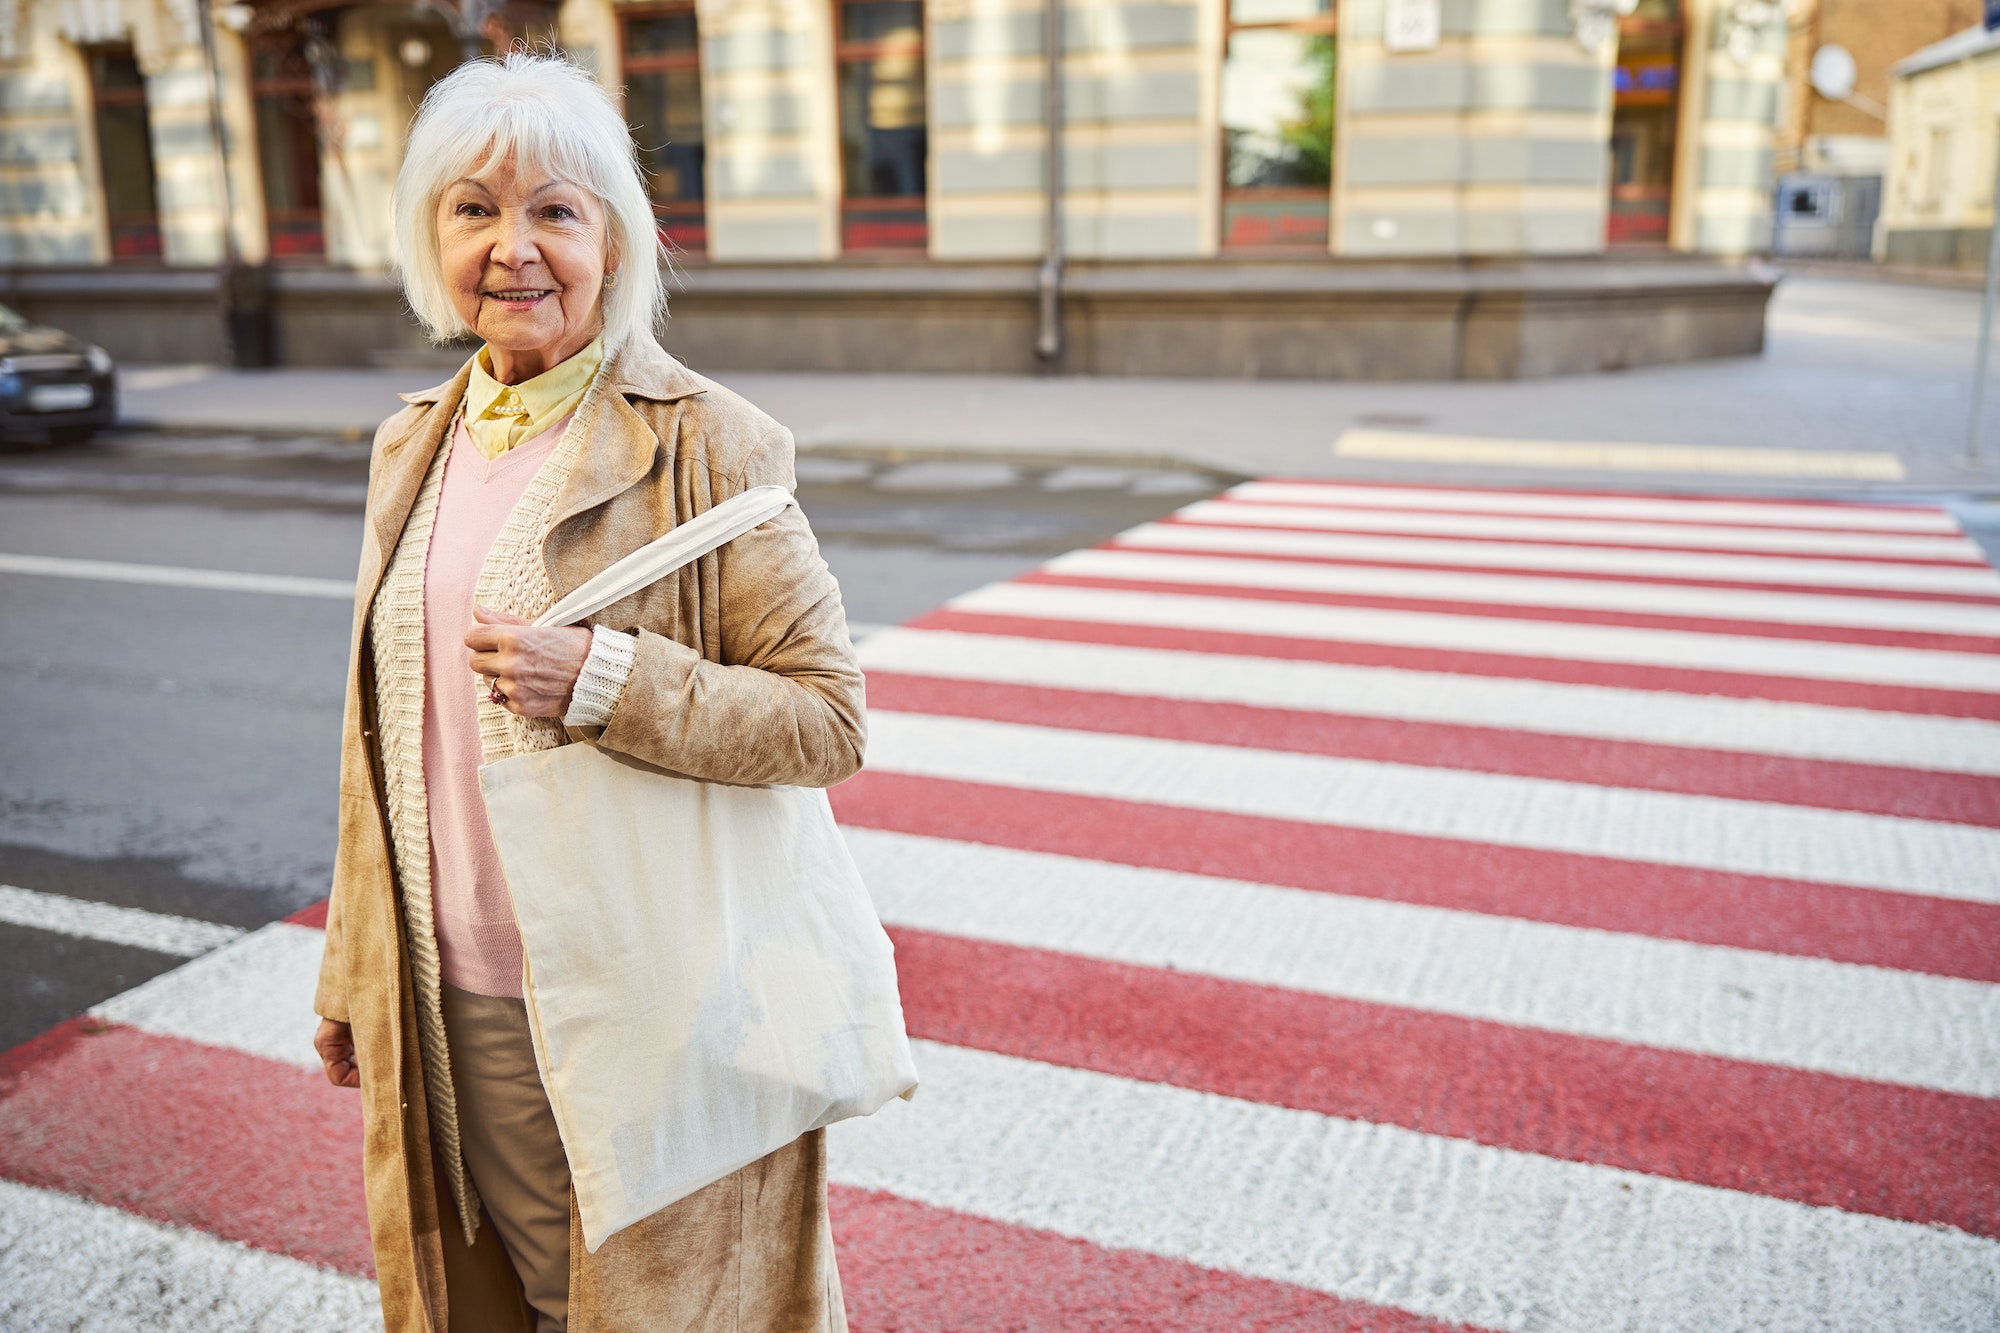 Outdoor portrait of senior female on the pedestrian crossing